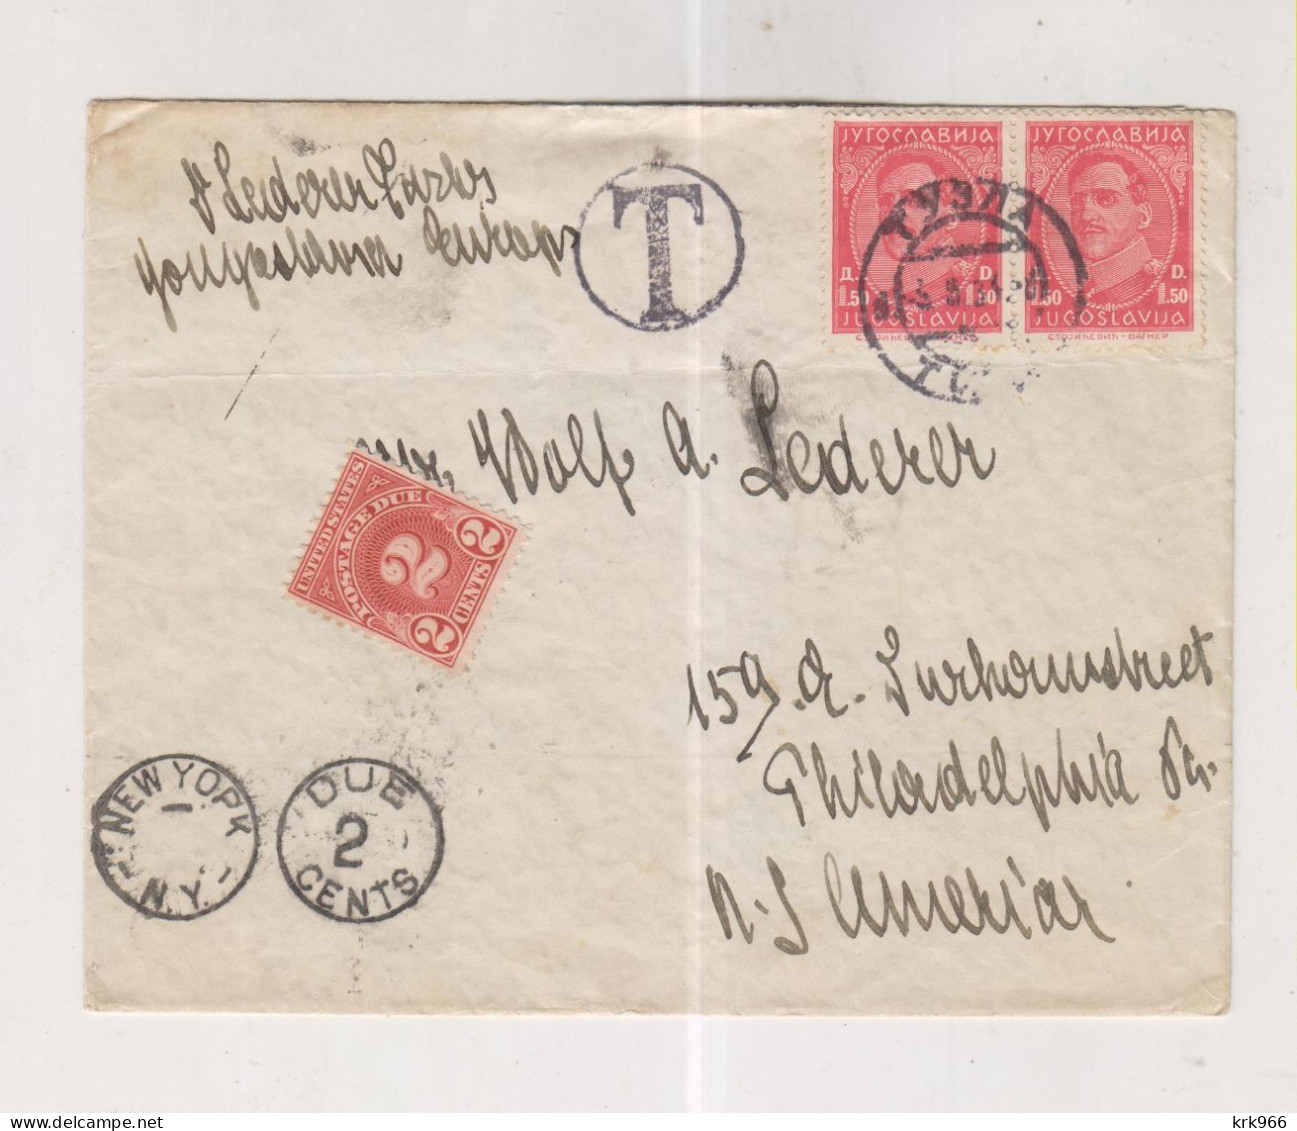 YUGOSLAVIA TUZLA 1934 Nice Cover To United States Postage Due - Storia Postale